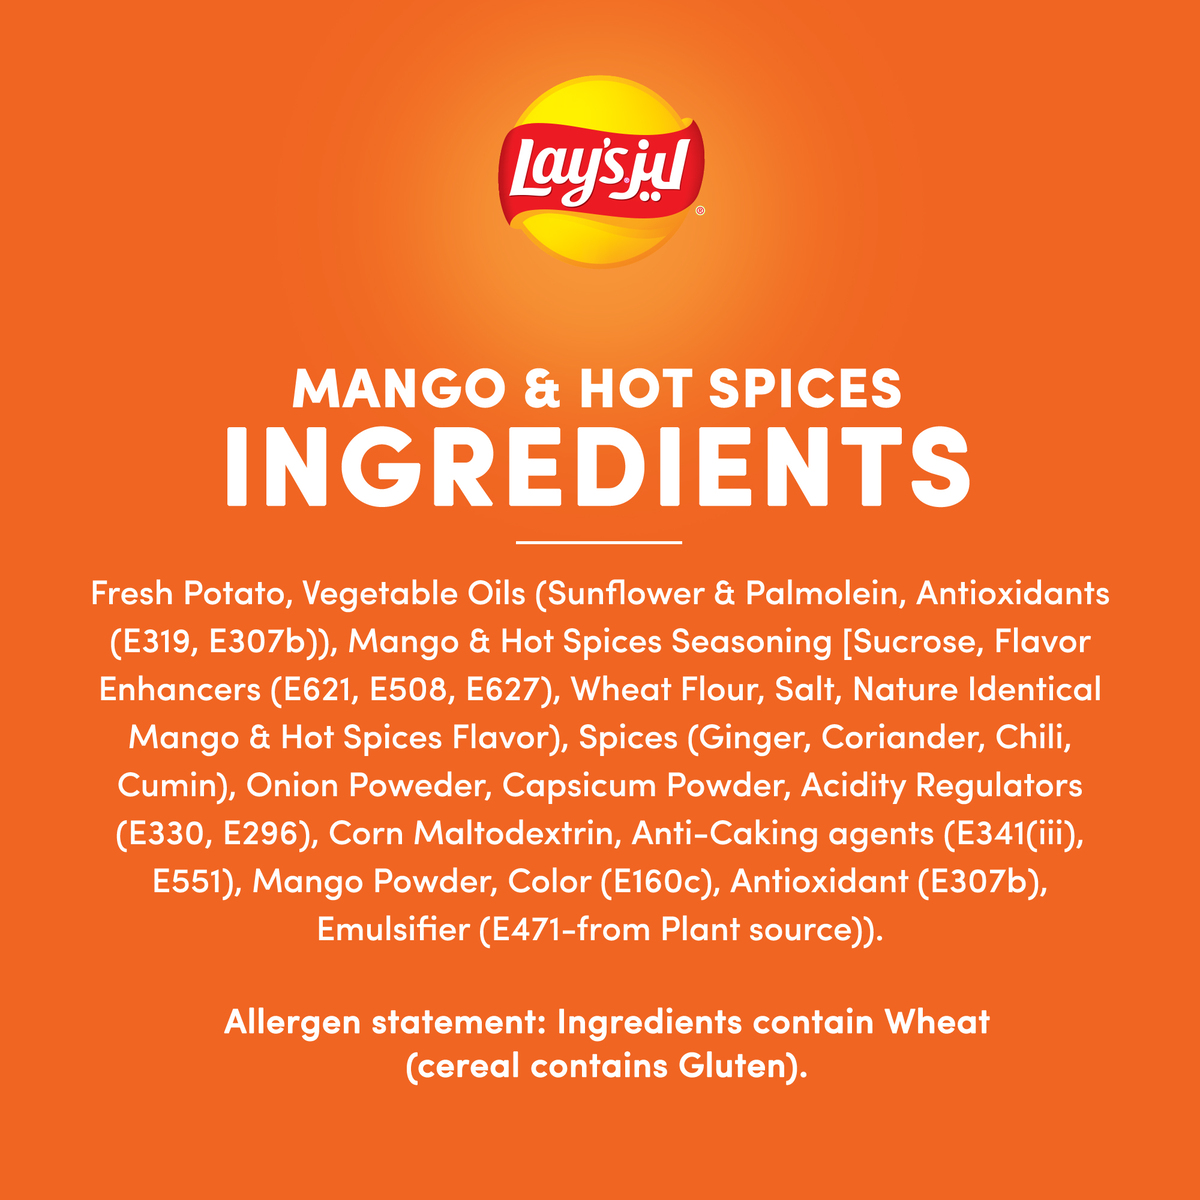 Lay’s Mango & Hot Spices Crispy & Crunchy Snack 14 x 23 g